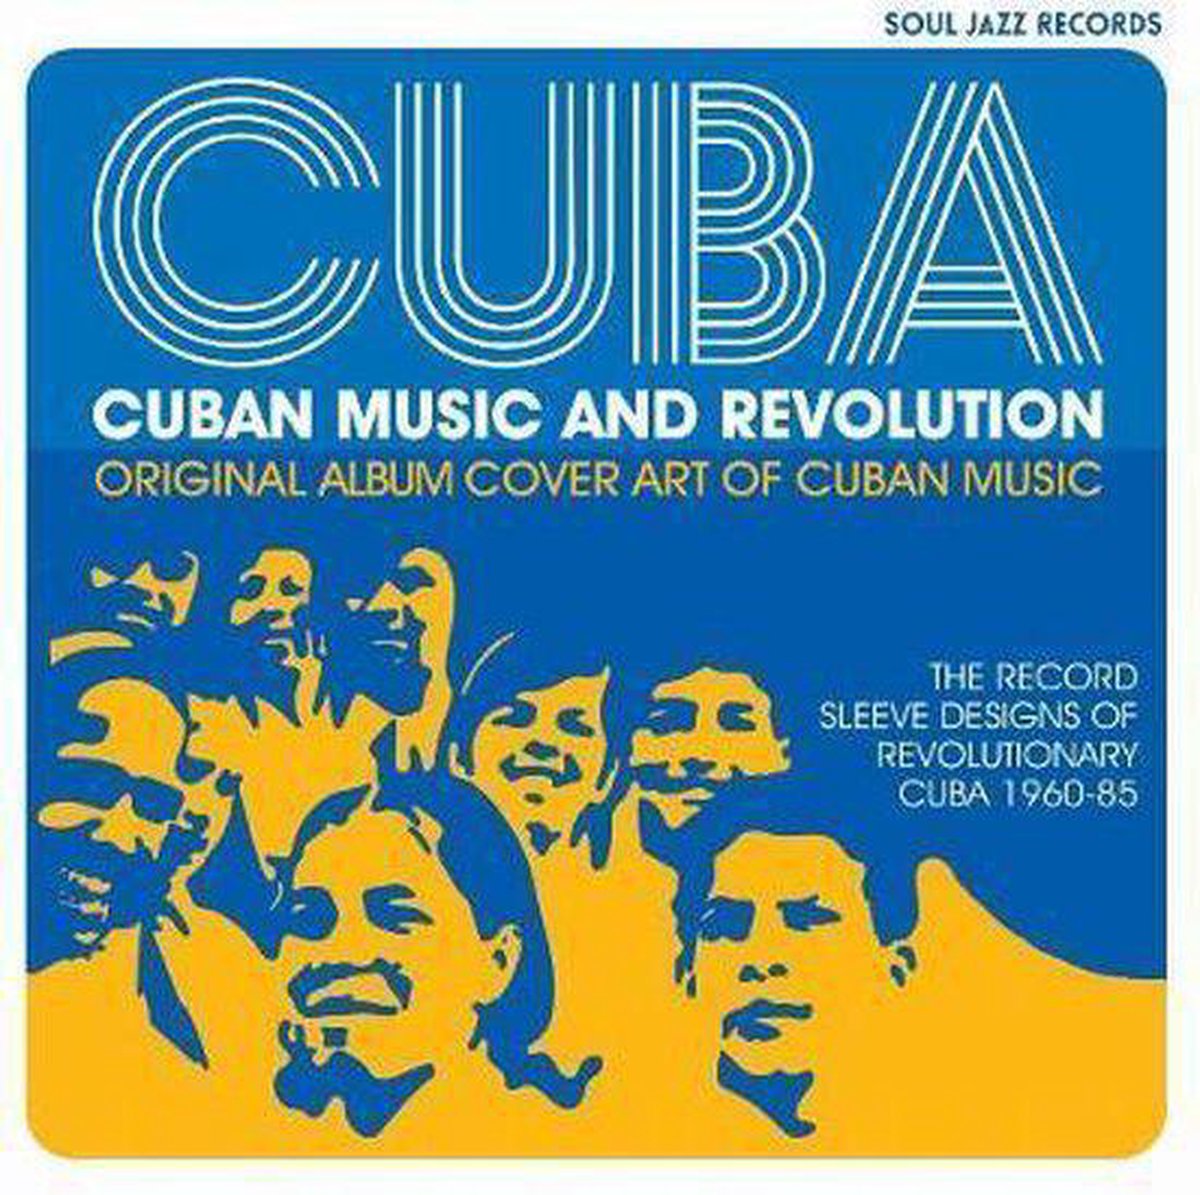 Cuba: Music and Revolution: Original Album Cover Art of Cuban Music: The Record Sleeve Designs of Revolutionary Cuba 1960-85 - Gilles Peterson